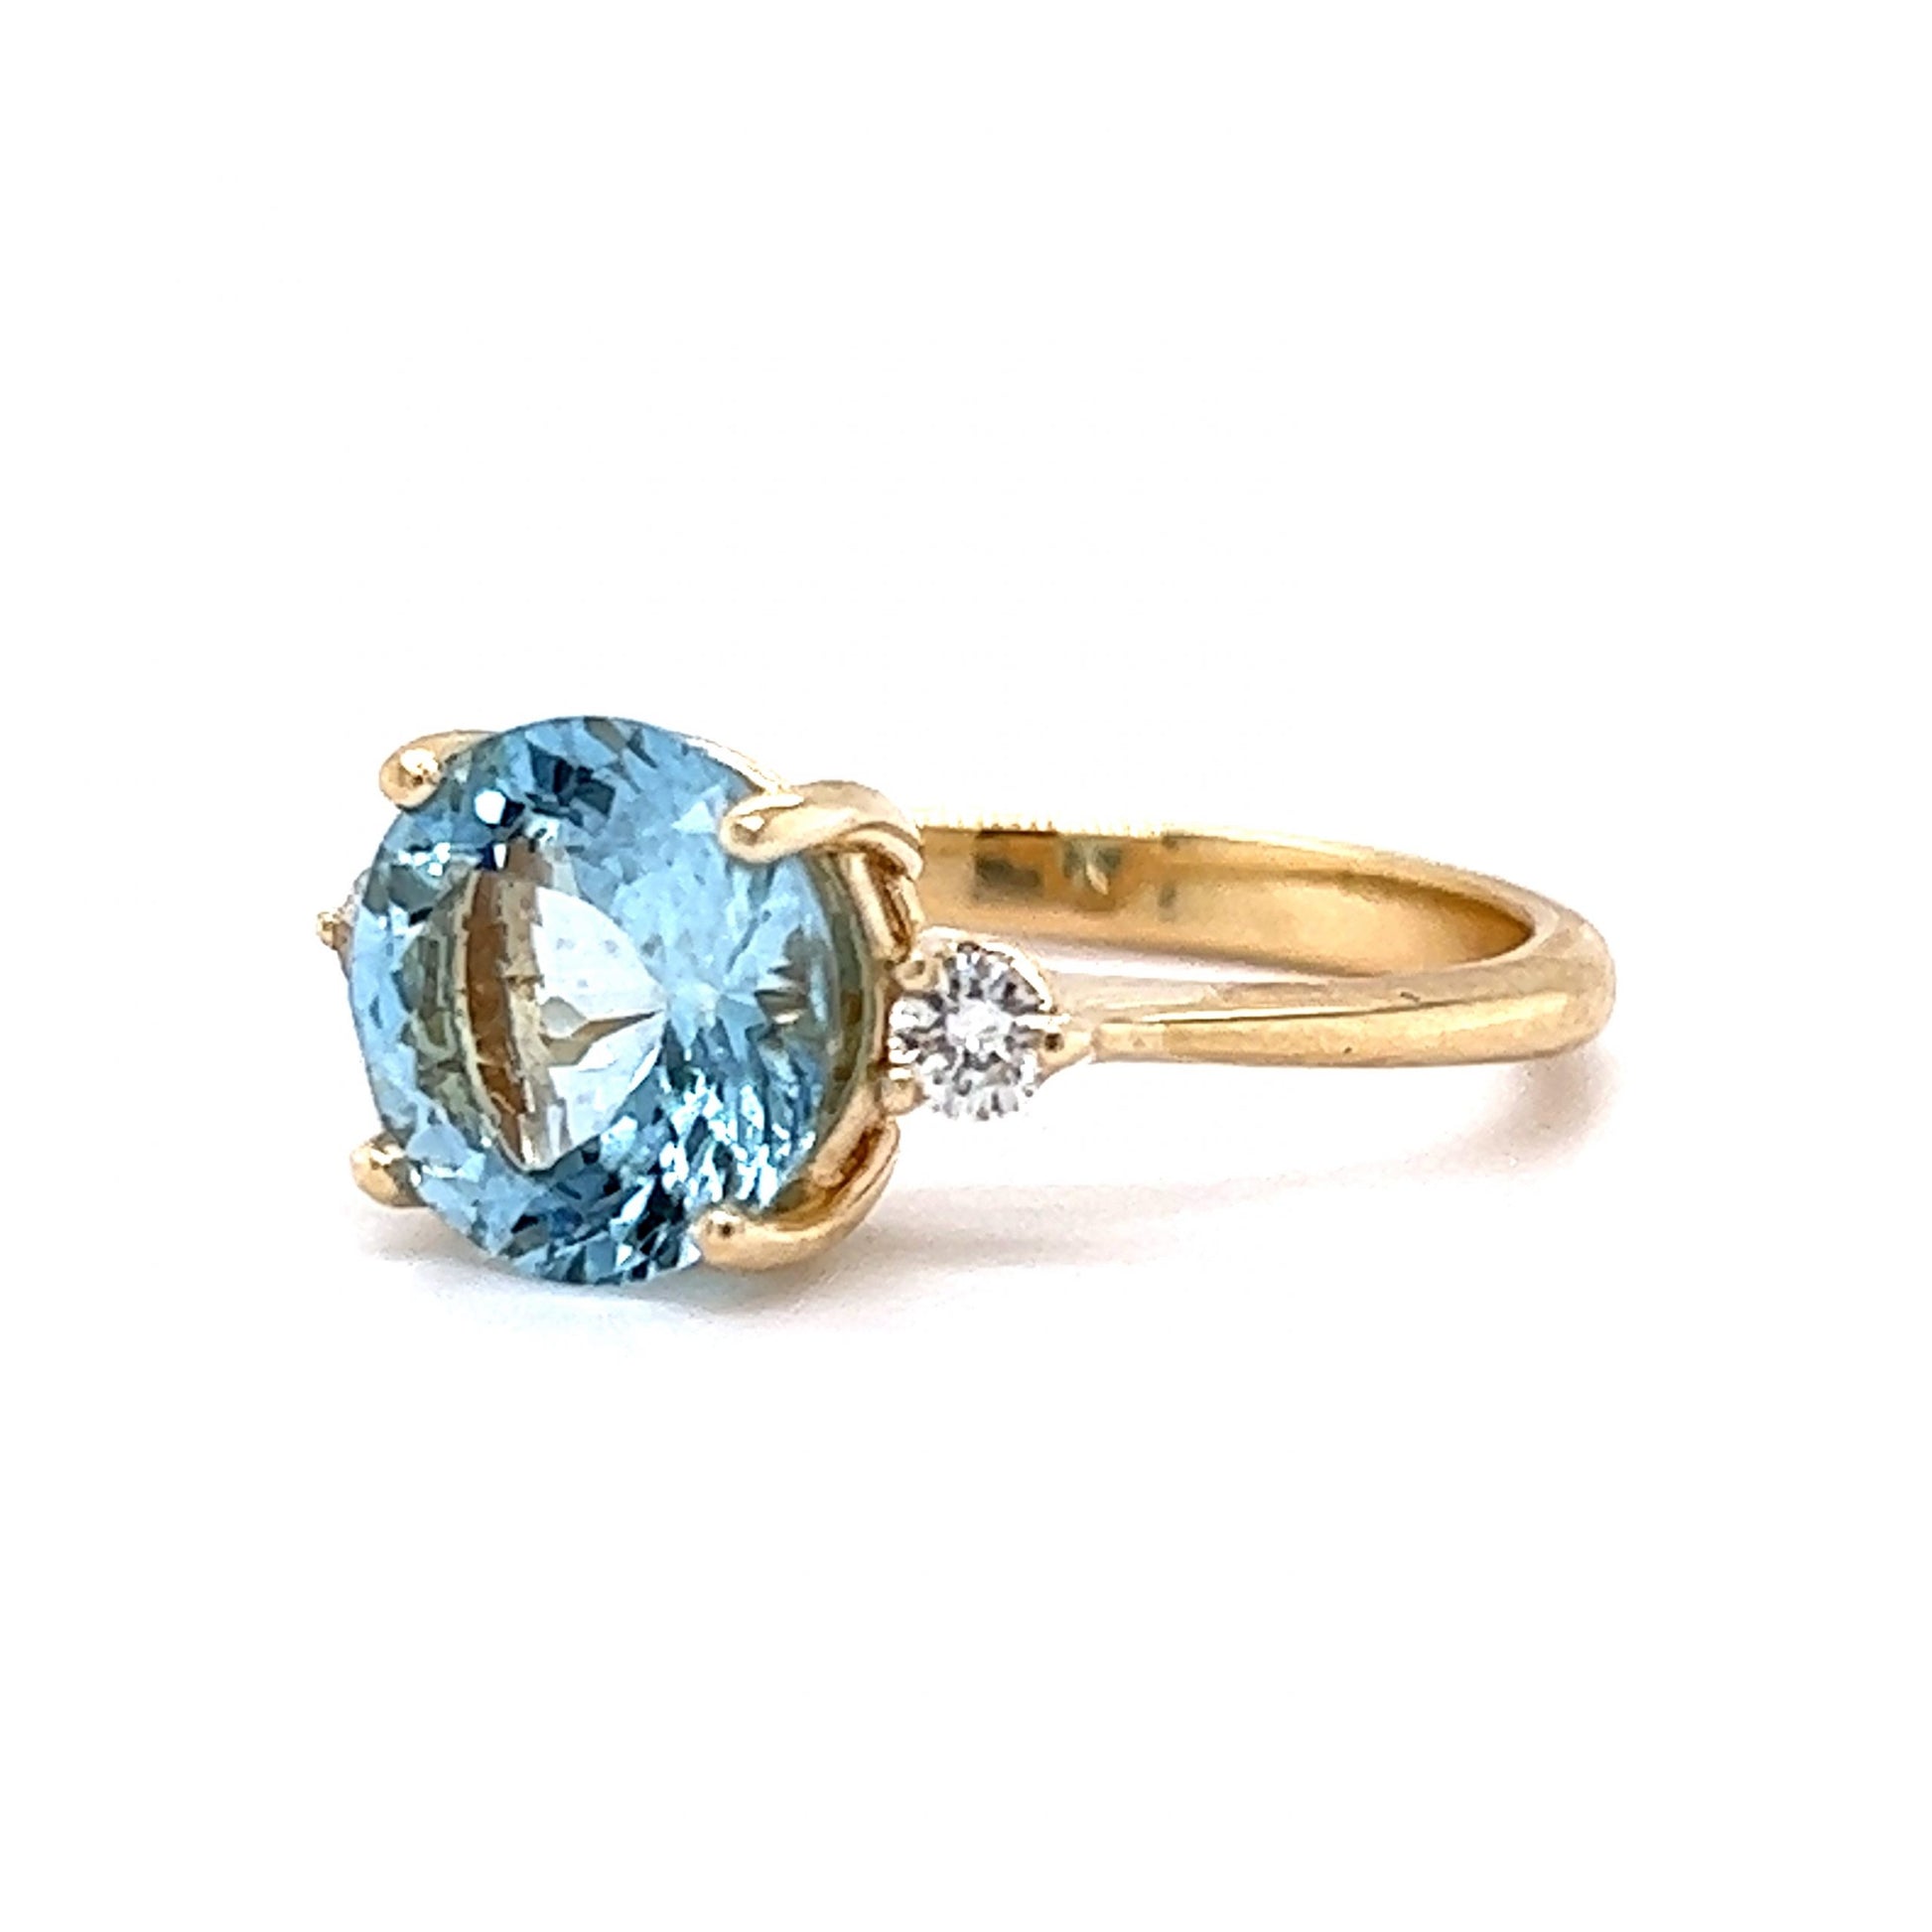 2.21 Aquamarine & Diamond Engagement Ring in 14k Gold